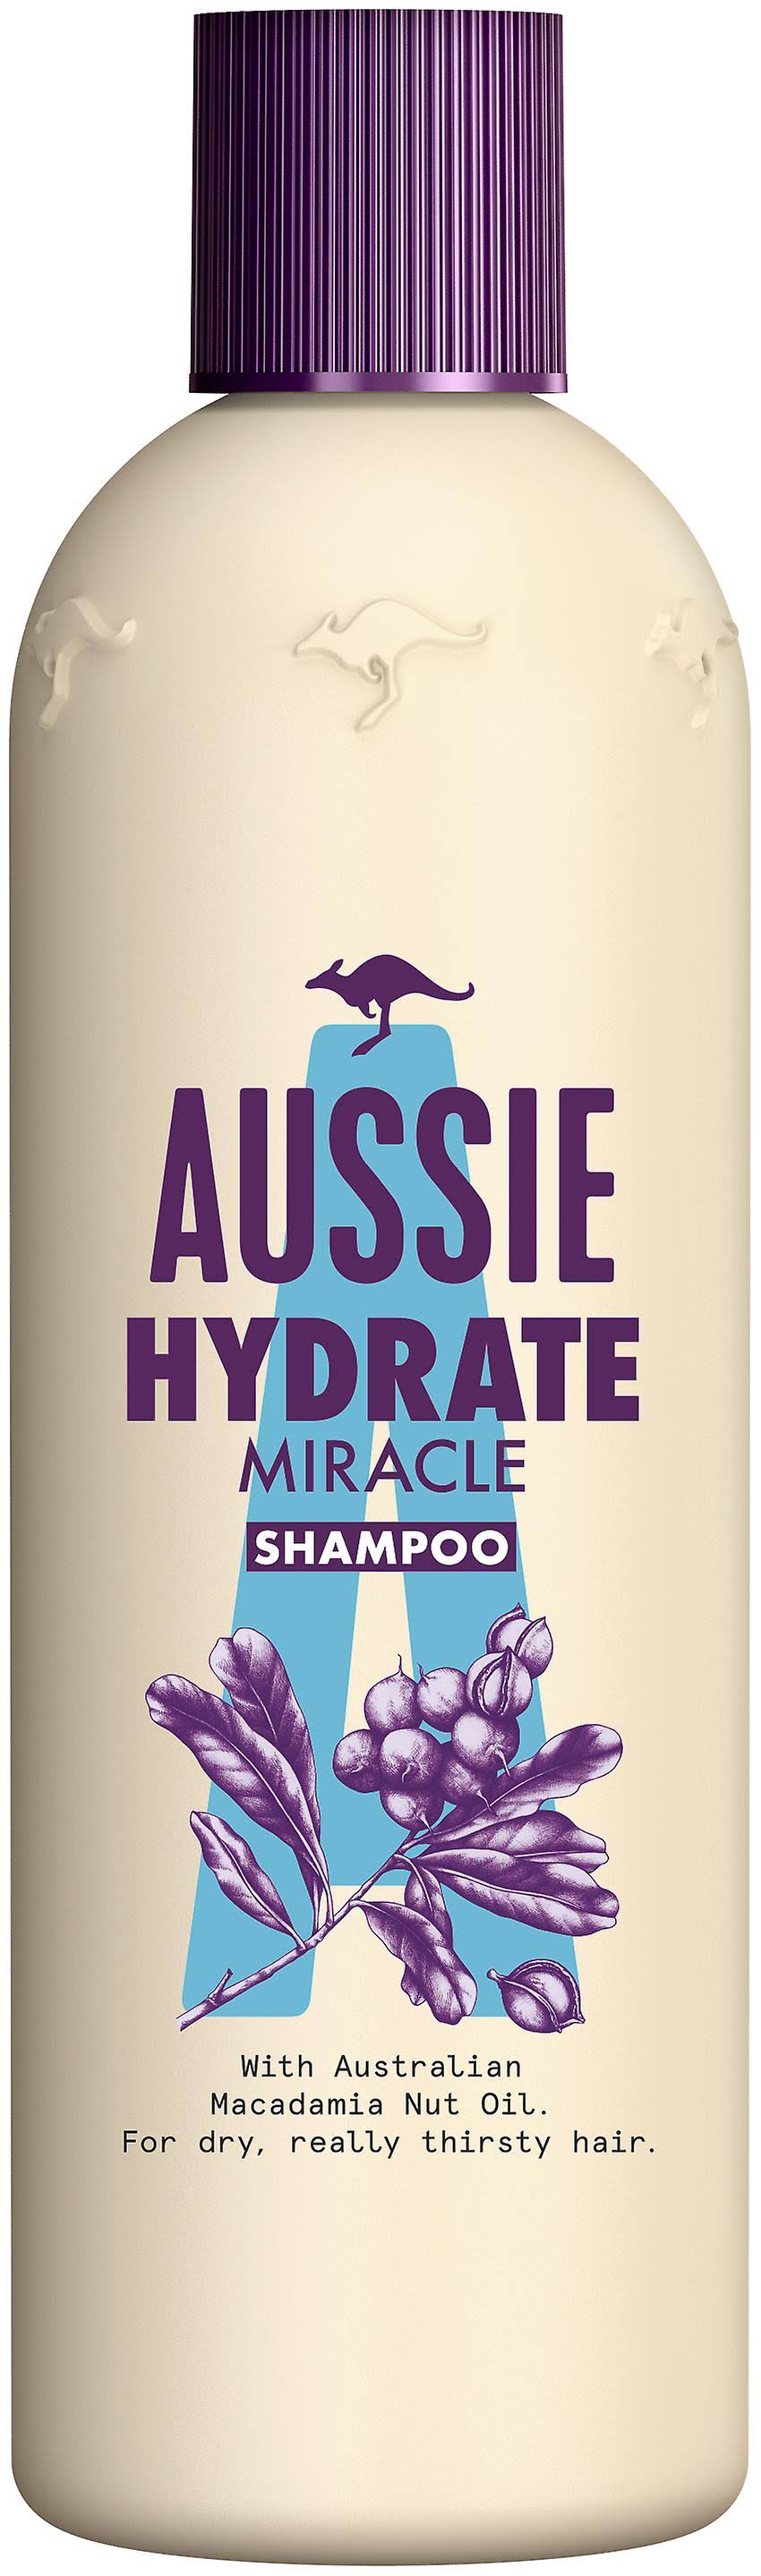 Aussie Miracle Moist Moisturising Shampoo - 300ml